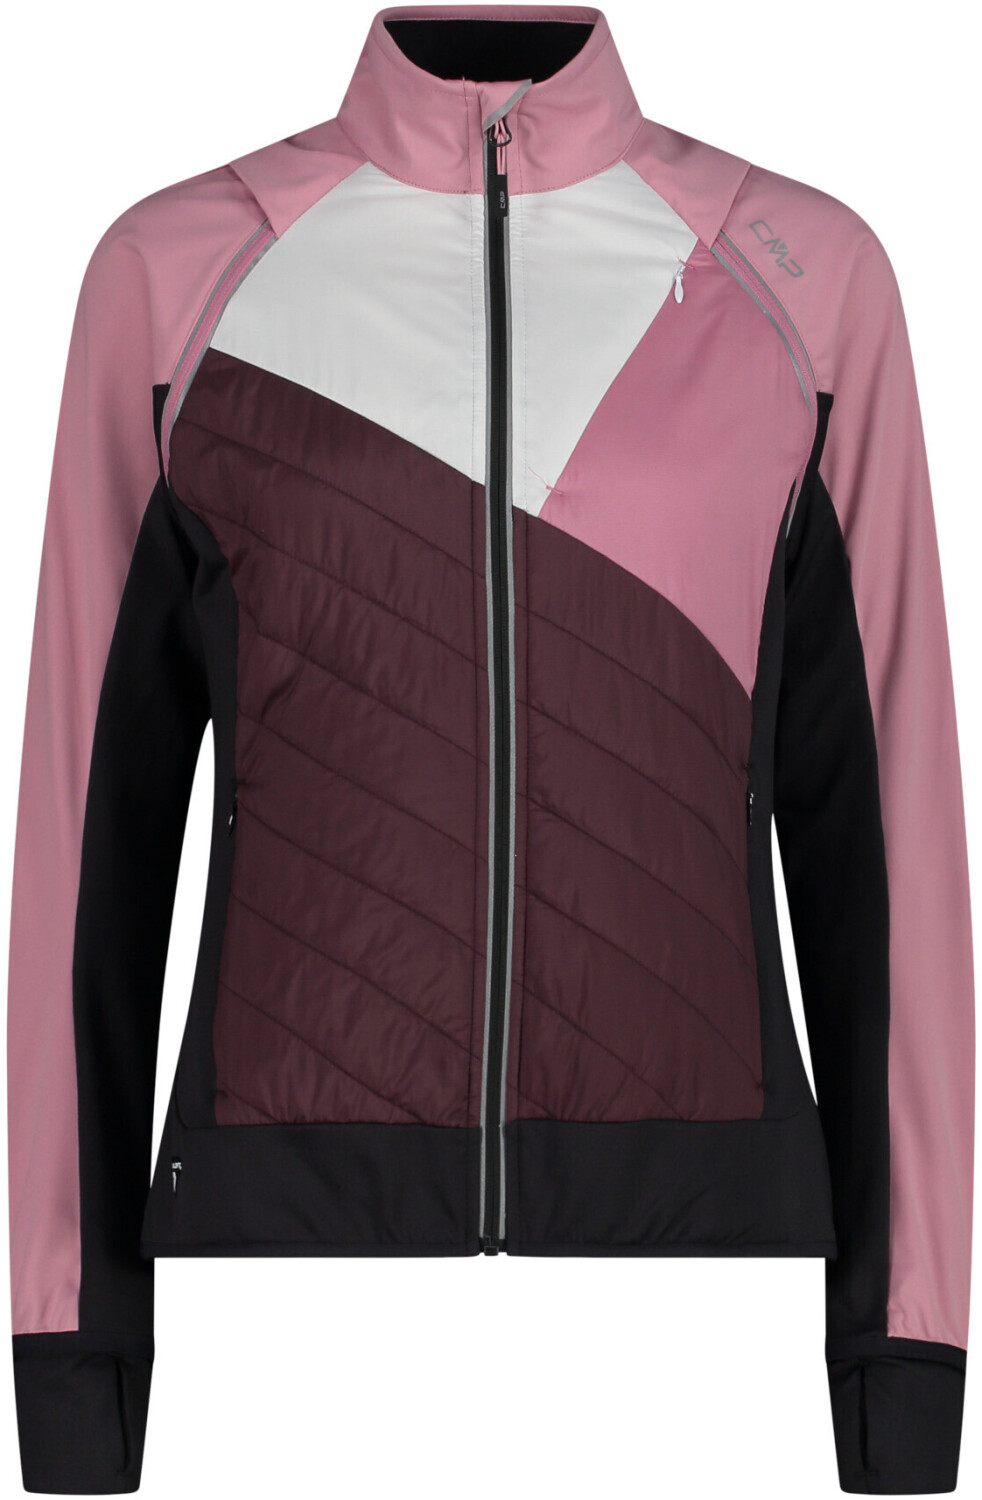 CMP Women\'s Hybrid Jacket with Removable Sleeves (30A2276) fard ab 51,65 €  | Preisvergleich bei